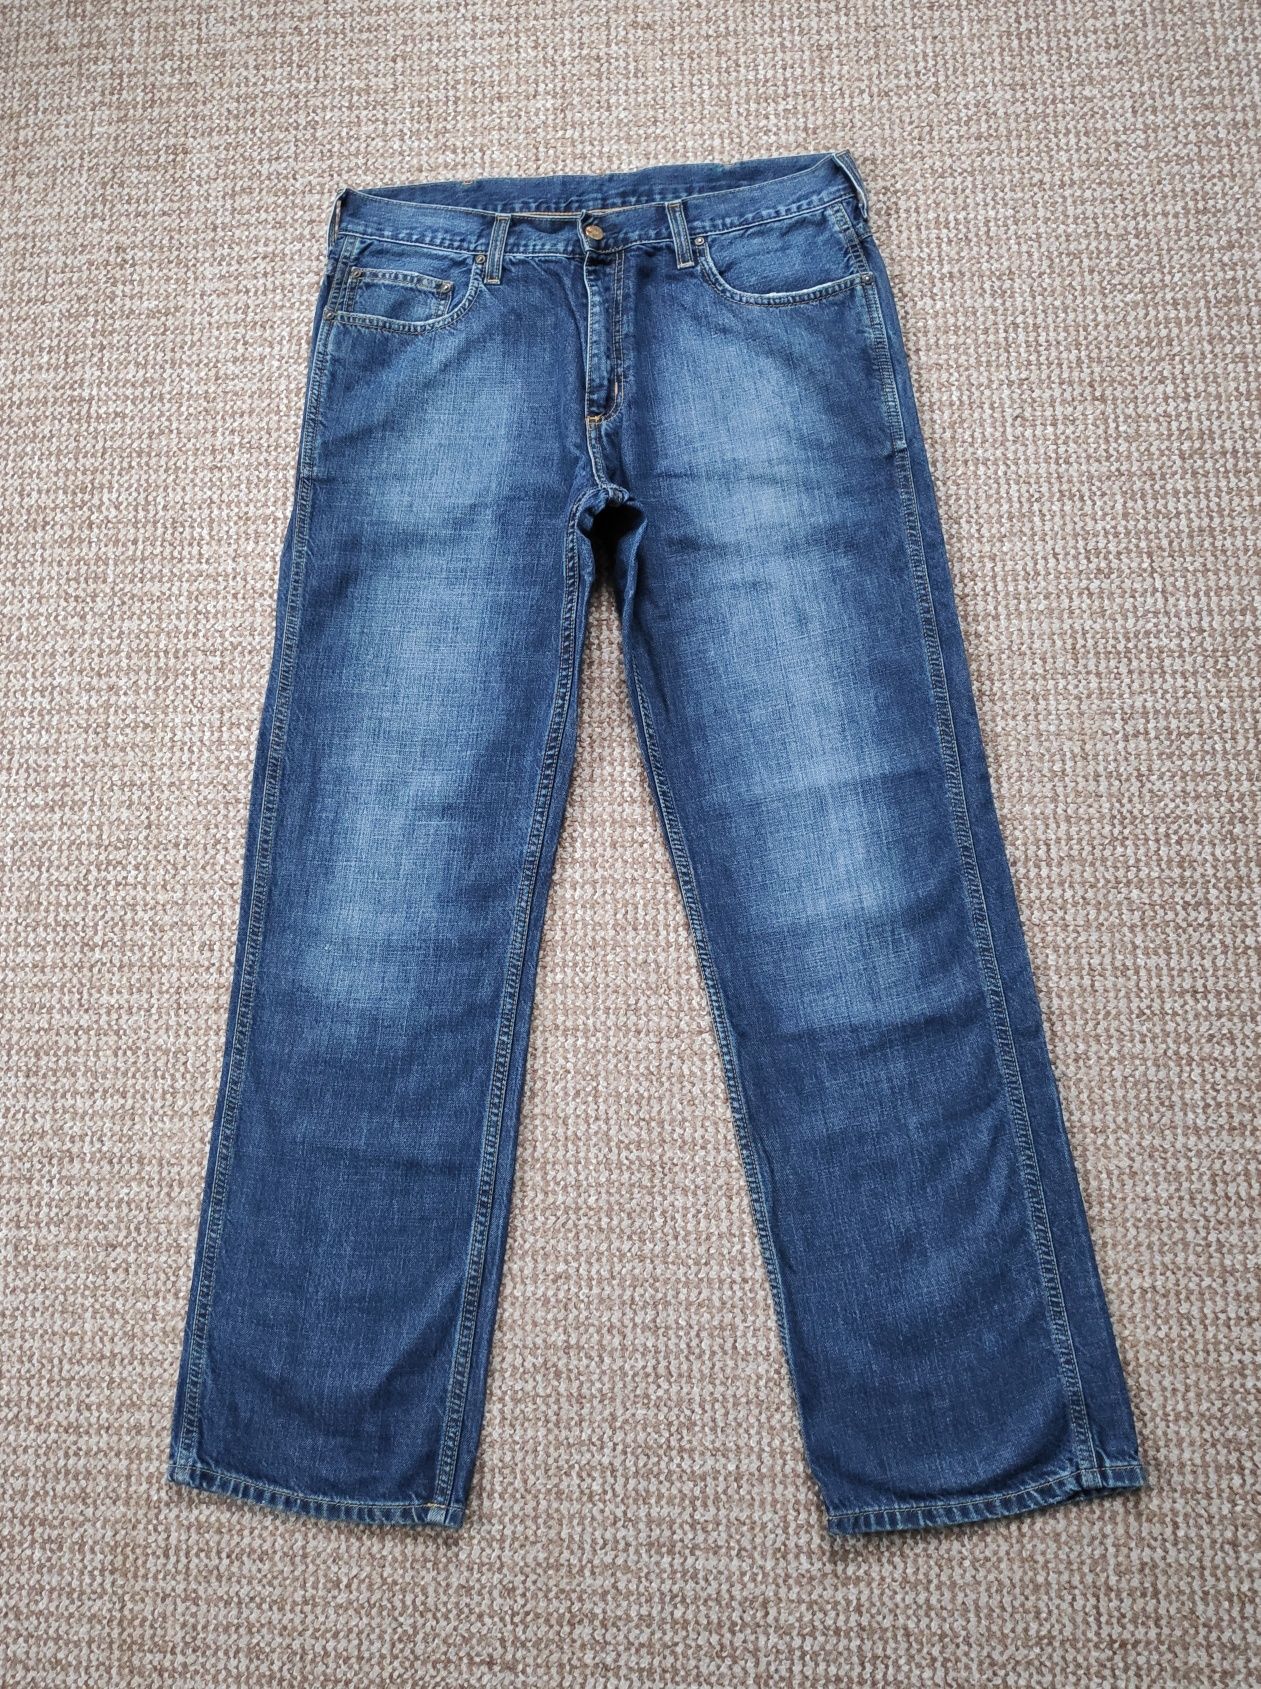 Carhartt western pant джинсы оригинал W33 L32